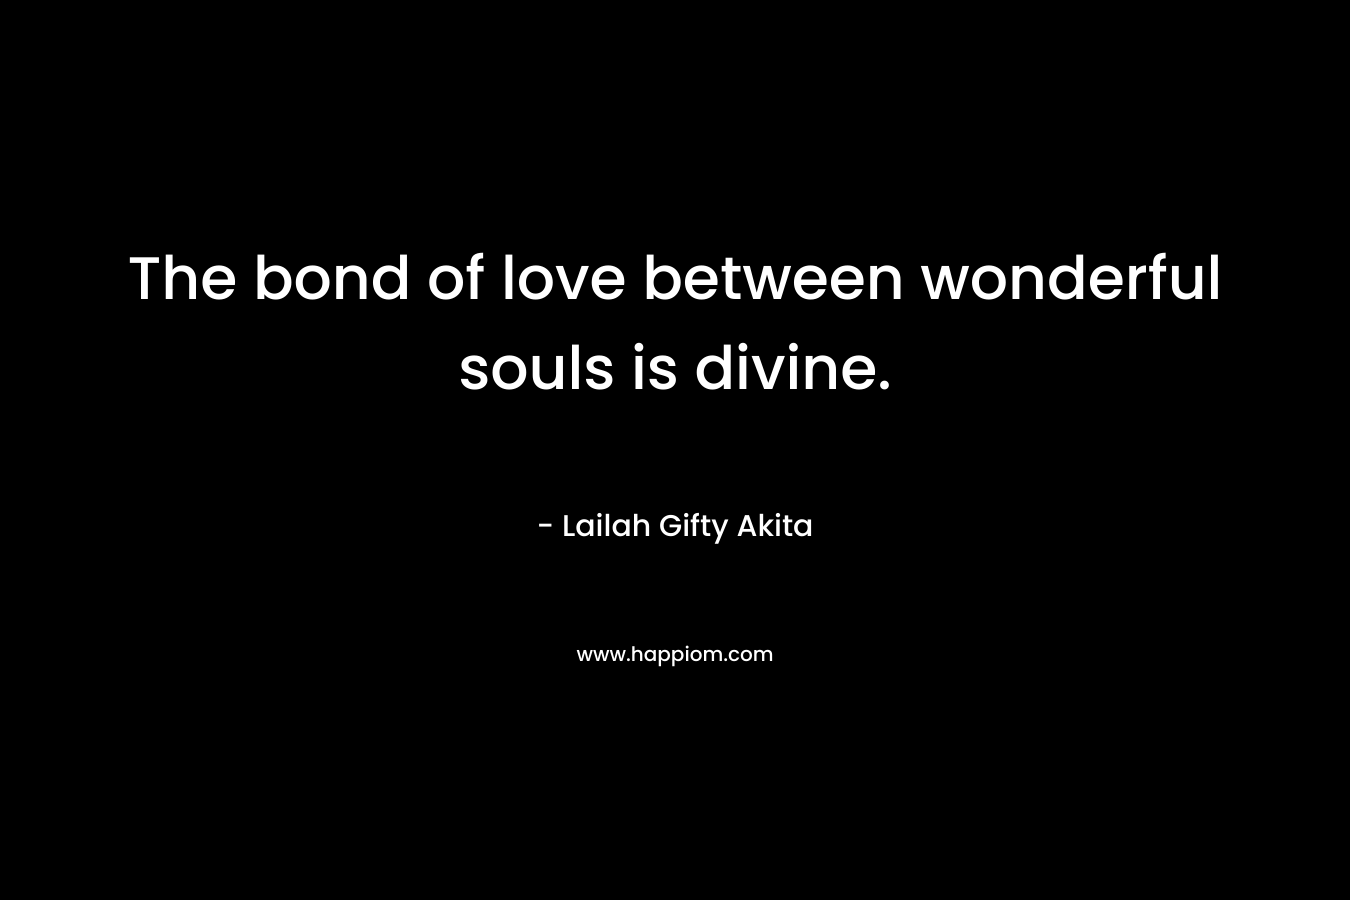 The bond of love between wonderful souls is divine.